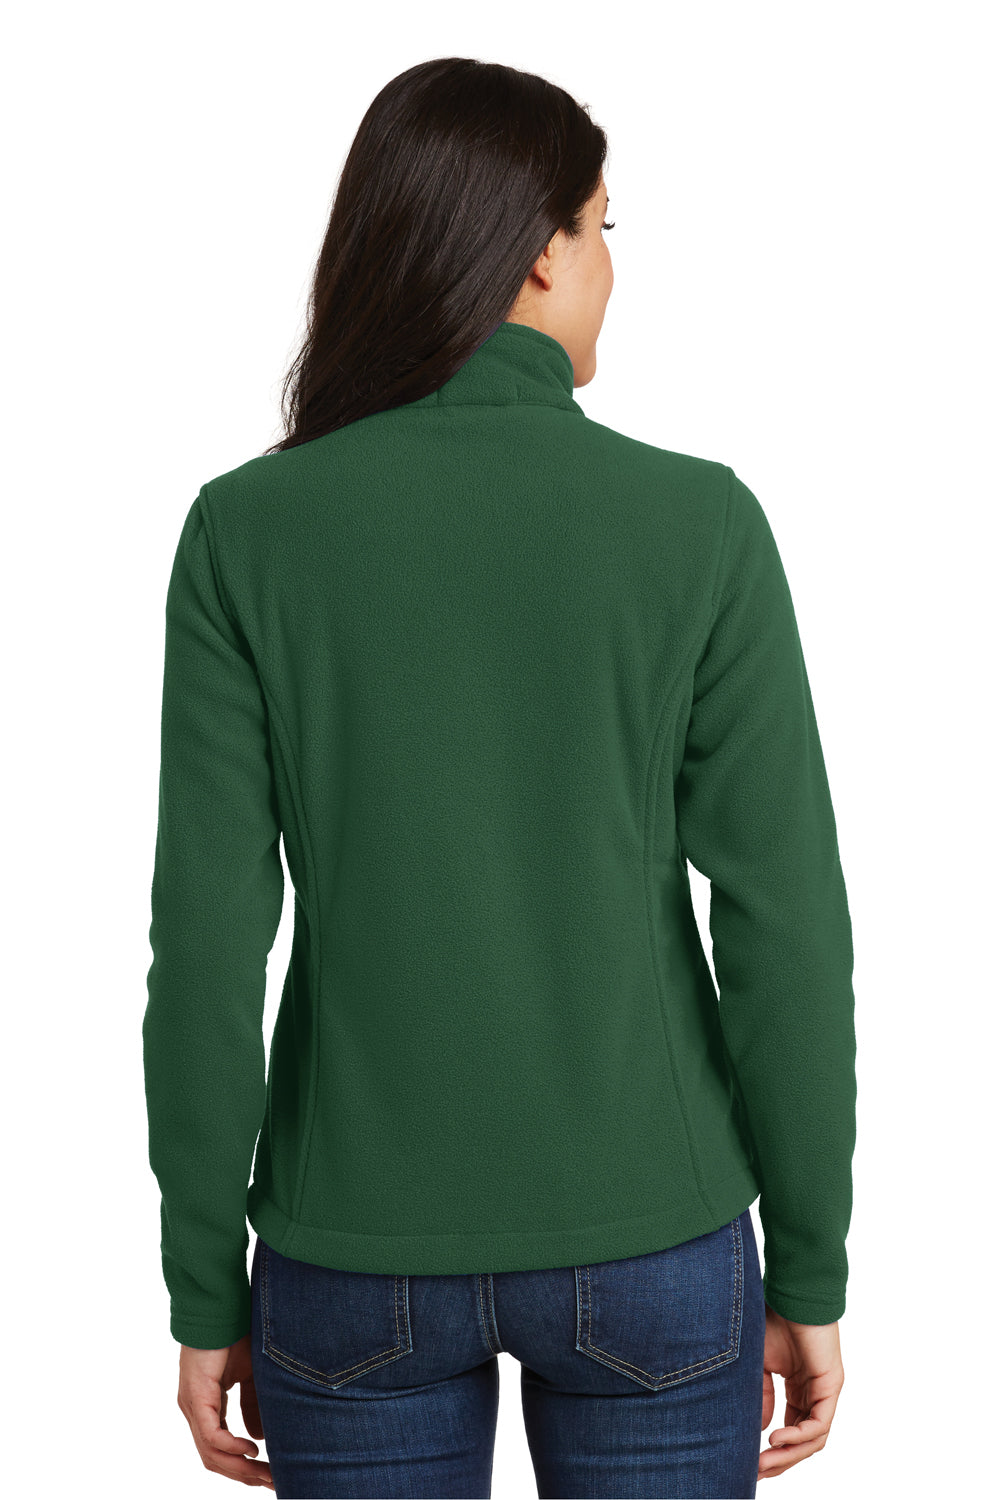 Port Authority L217 Womens Full Zip Fleece Jacket Forest Green Back